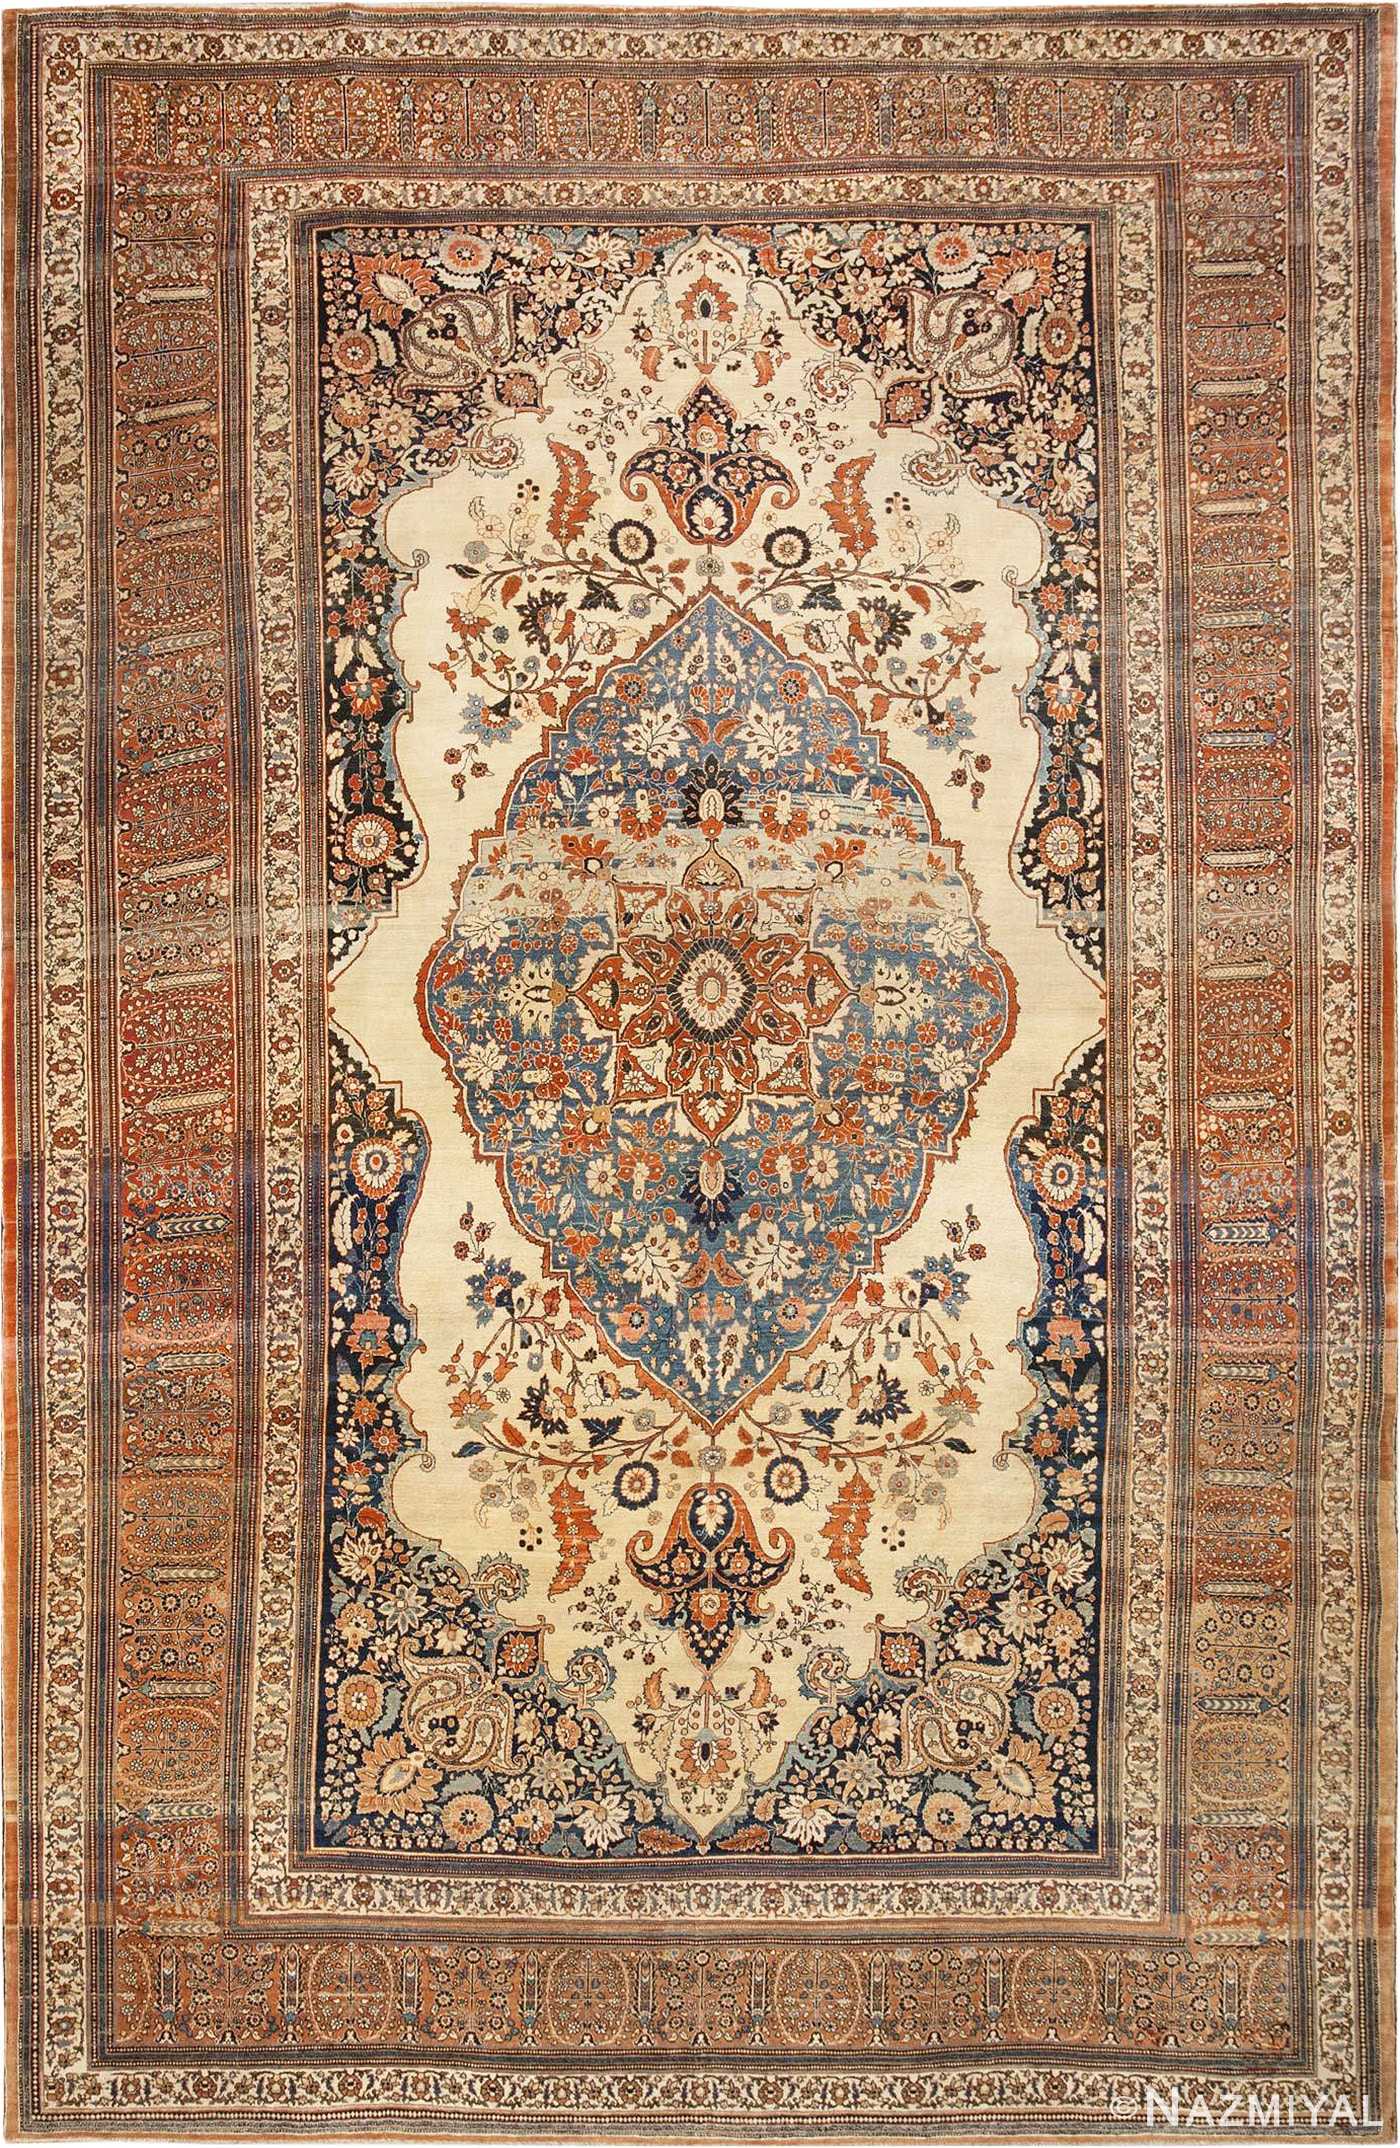 Fine Sky Blue Medallion Antique Persian Tabriz Rug #45778 by Nazmiyal Antique Rugs